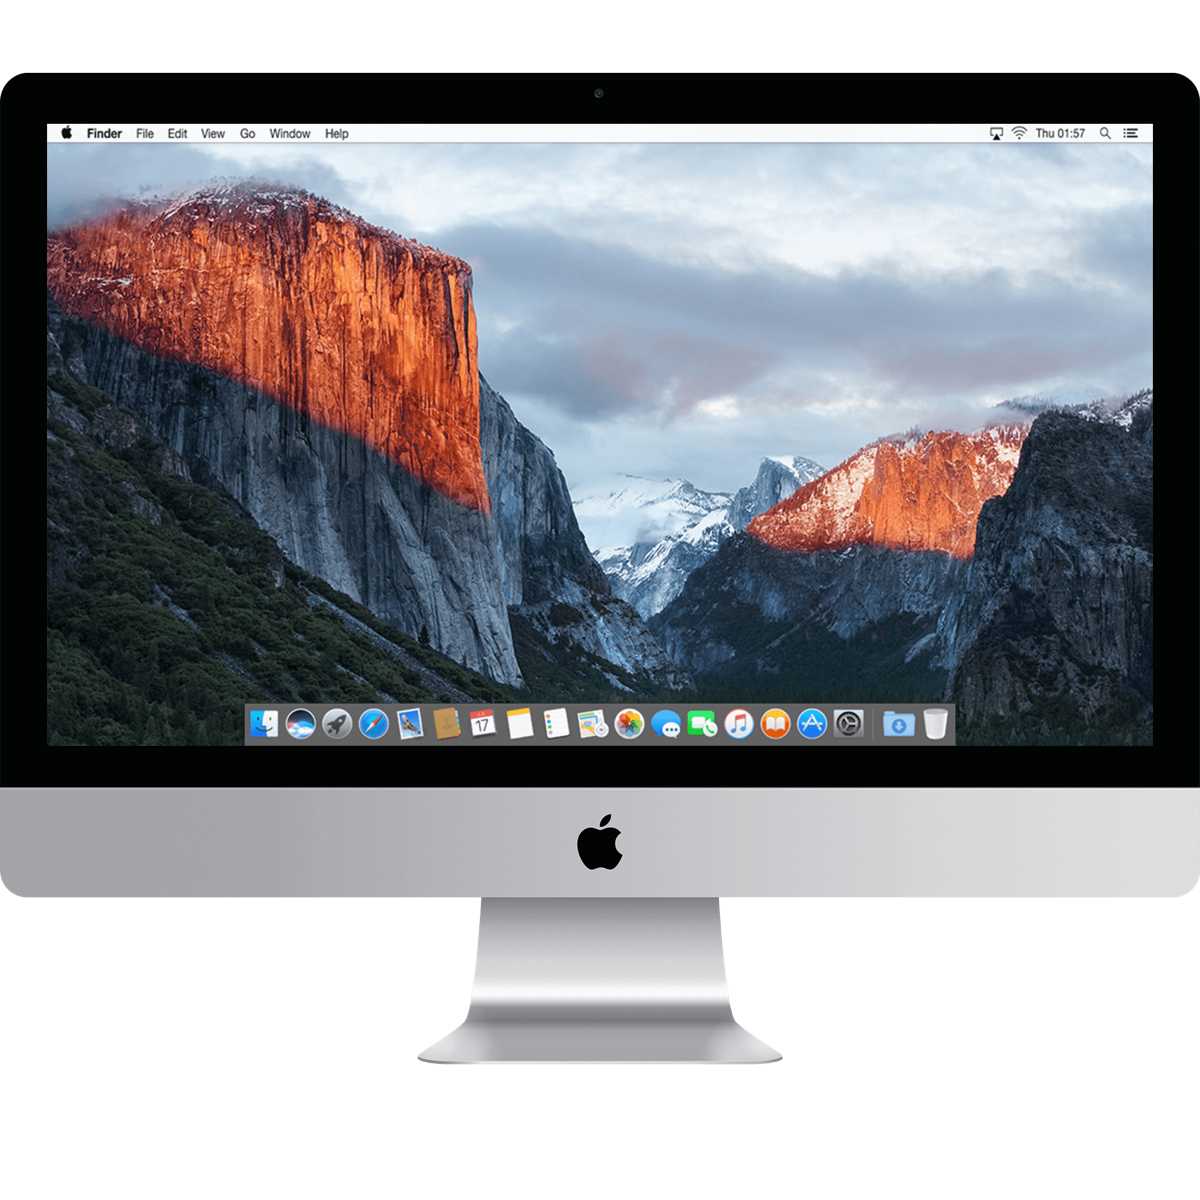 Refurbished iMac 27" (5K) i7 4.0 8GB 256GB